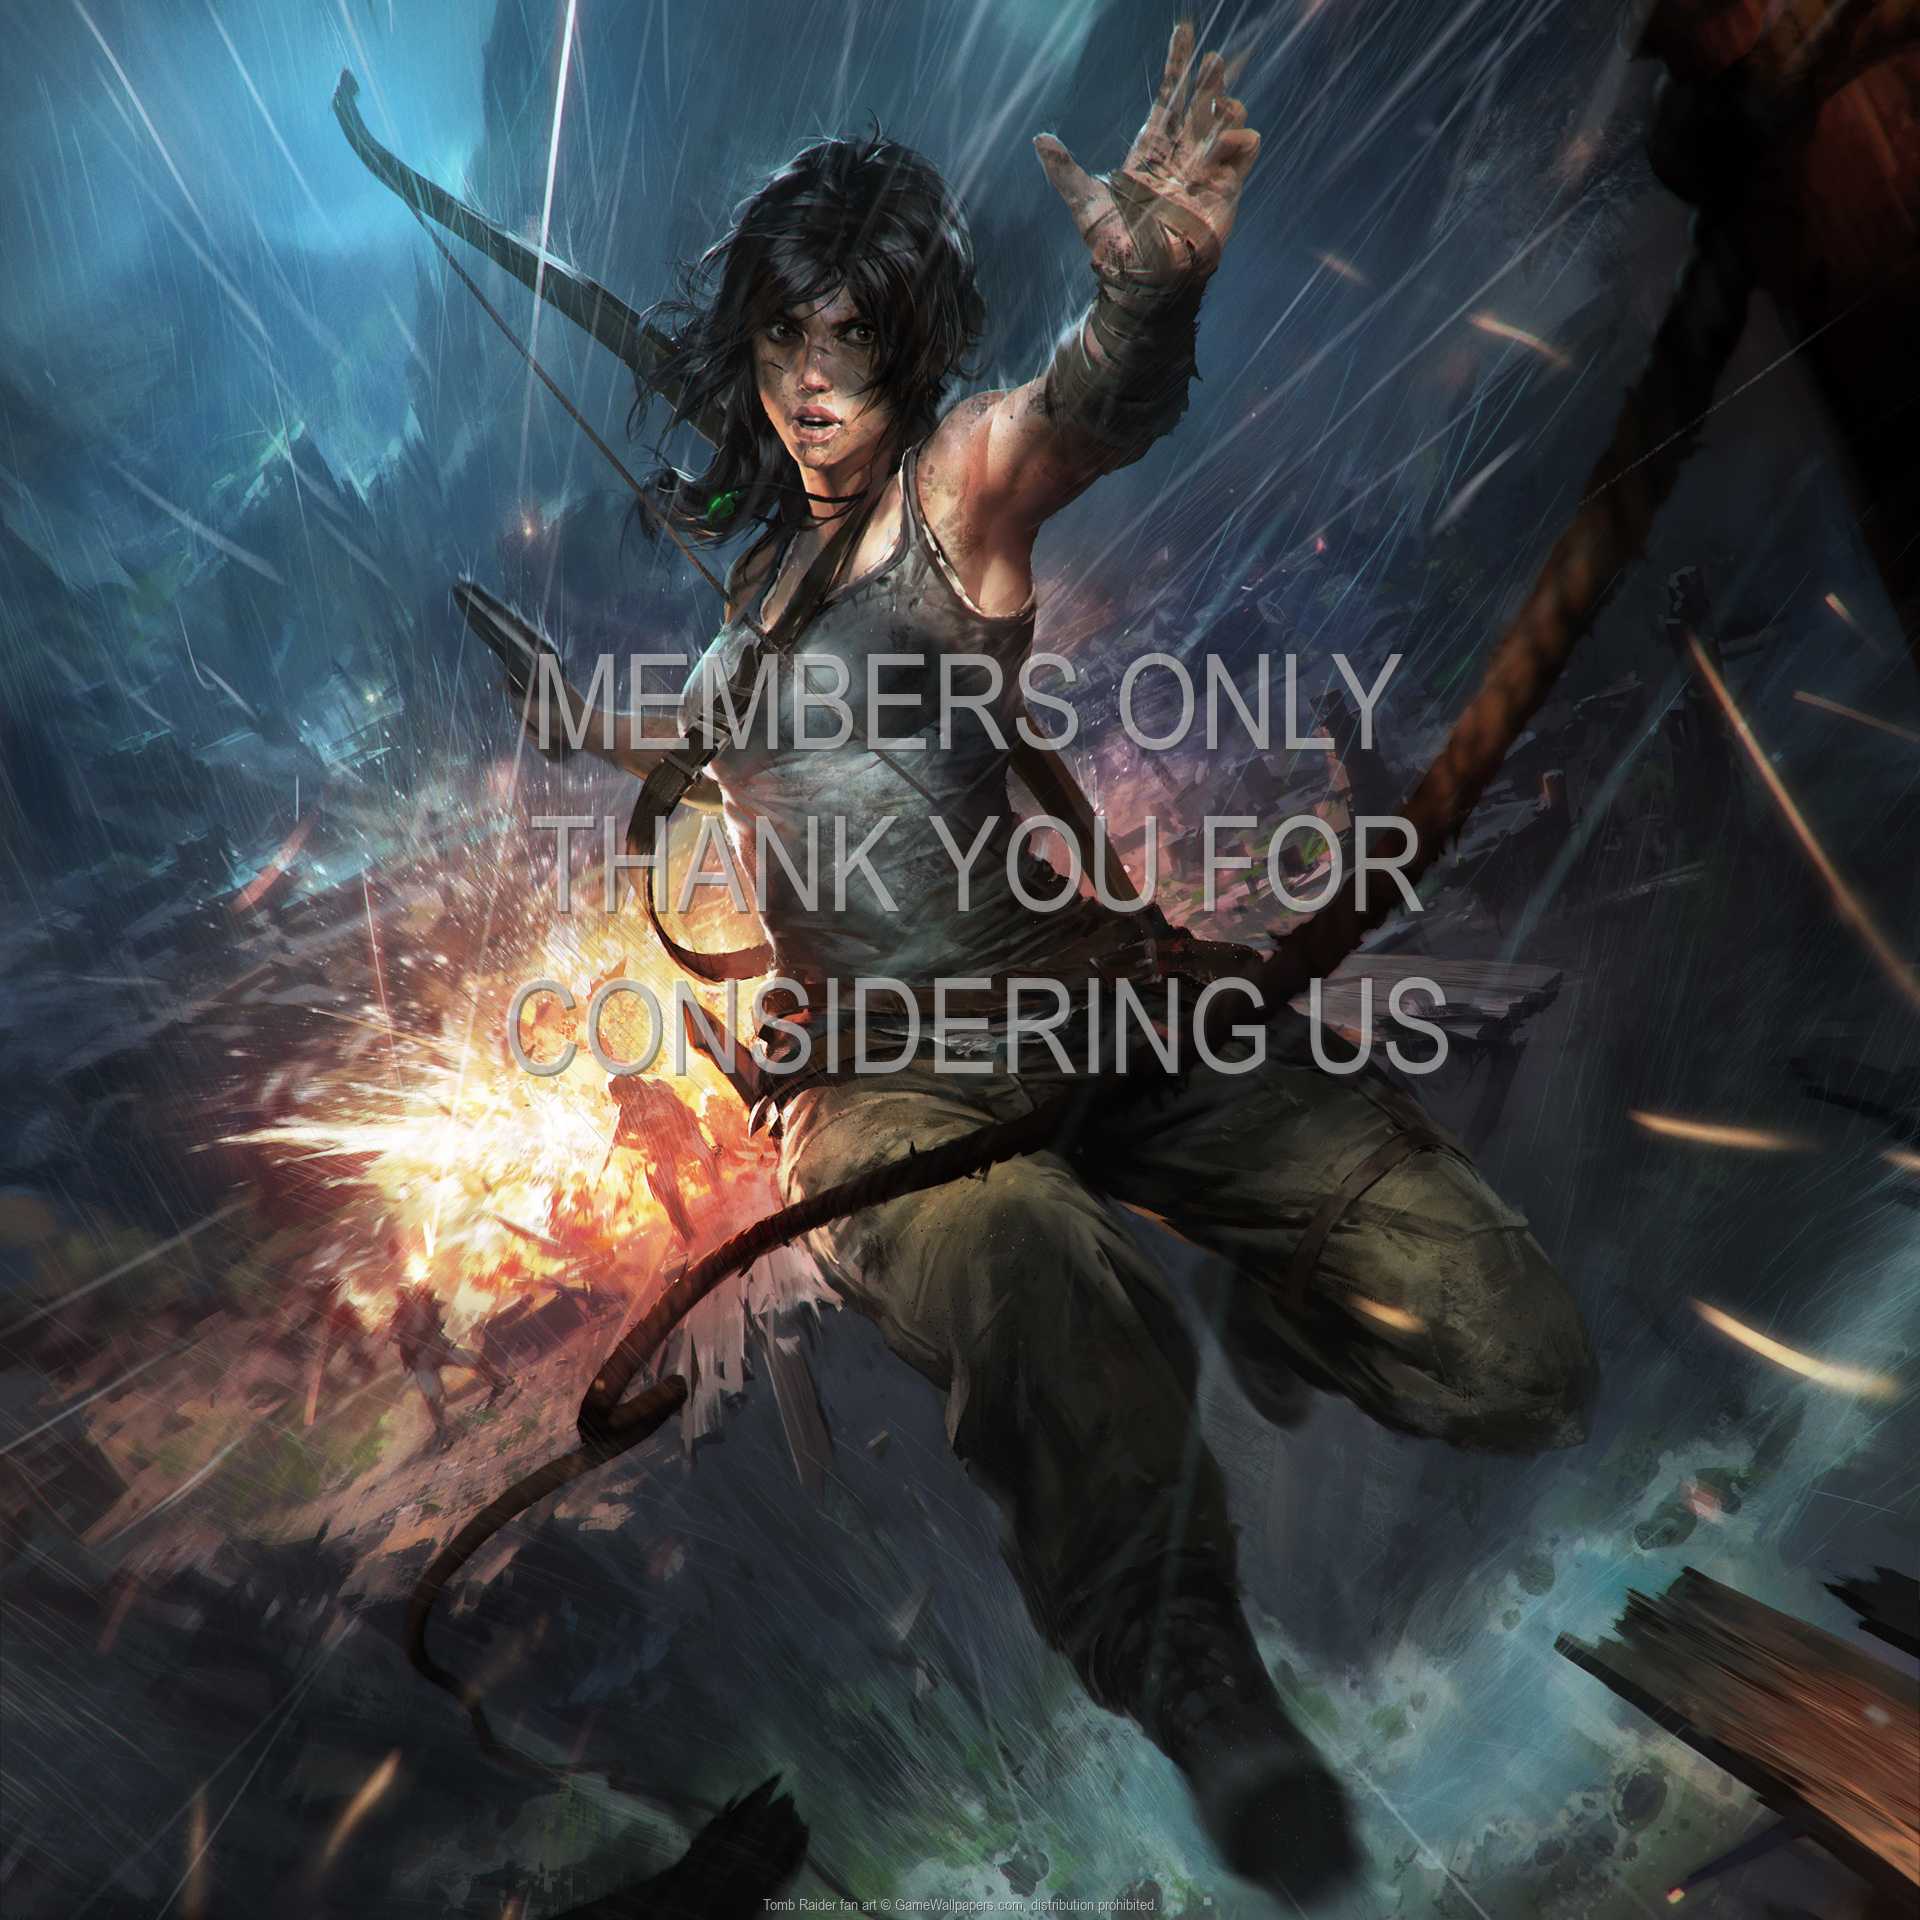 Tomb Raider fan art 1080p%20Horizontal Mobile wallpaper or background 04